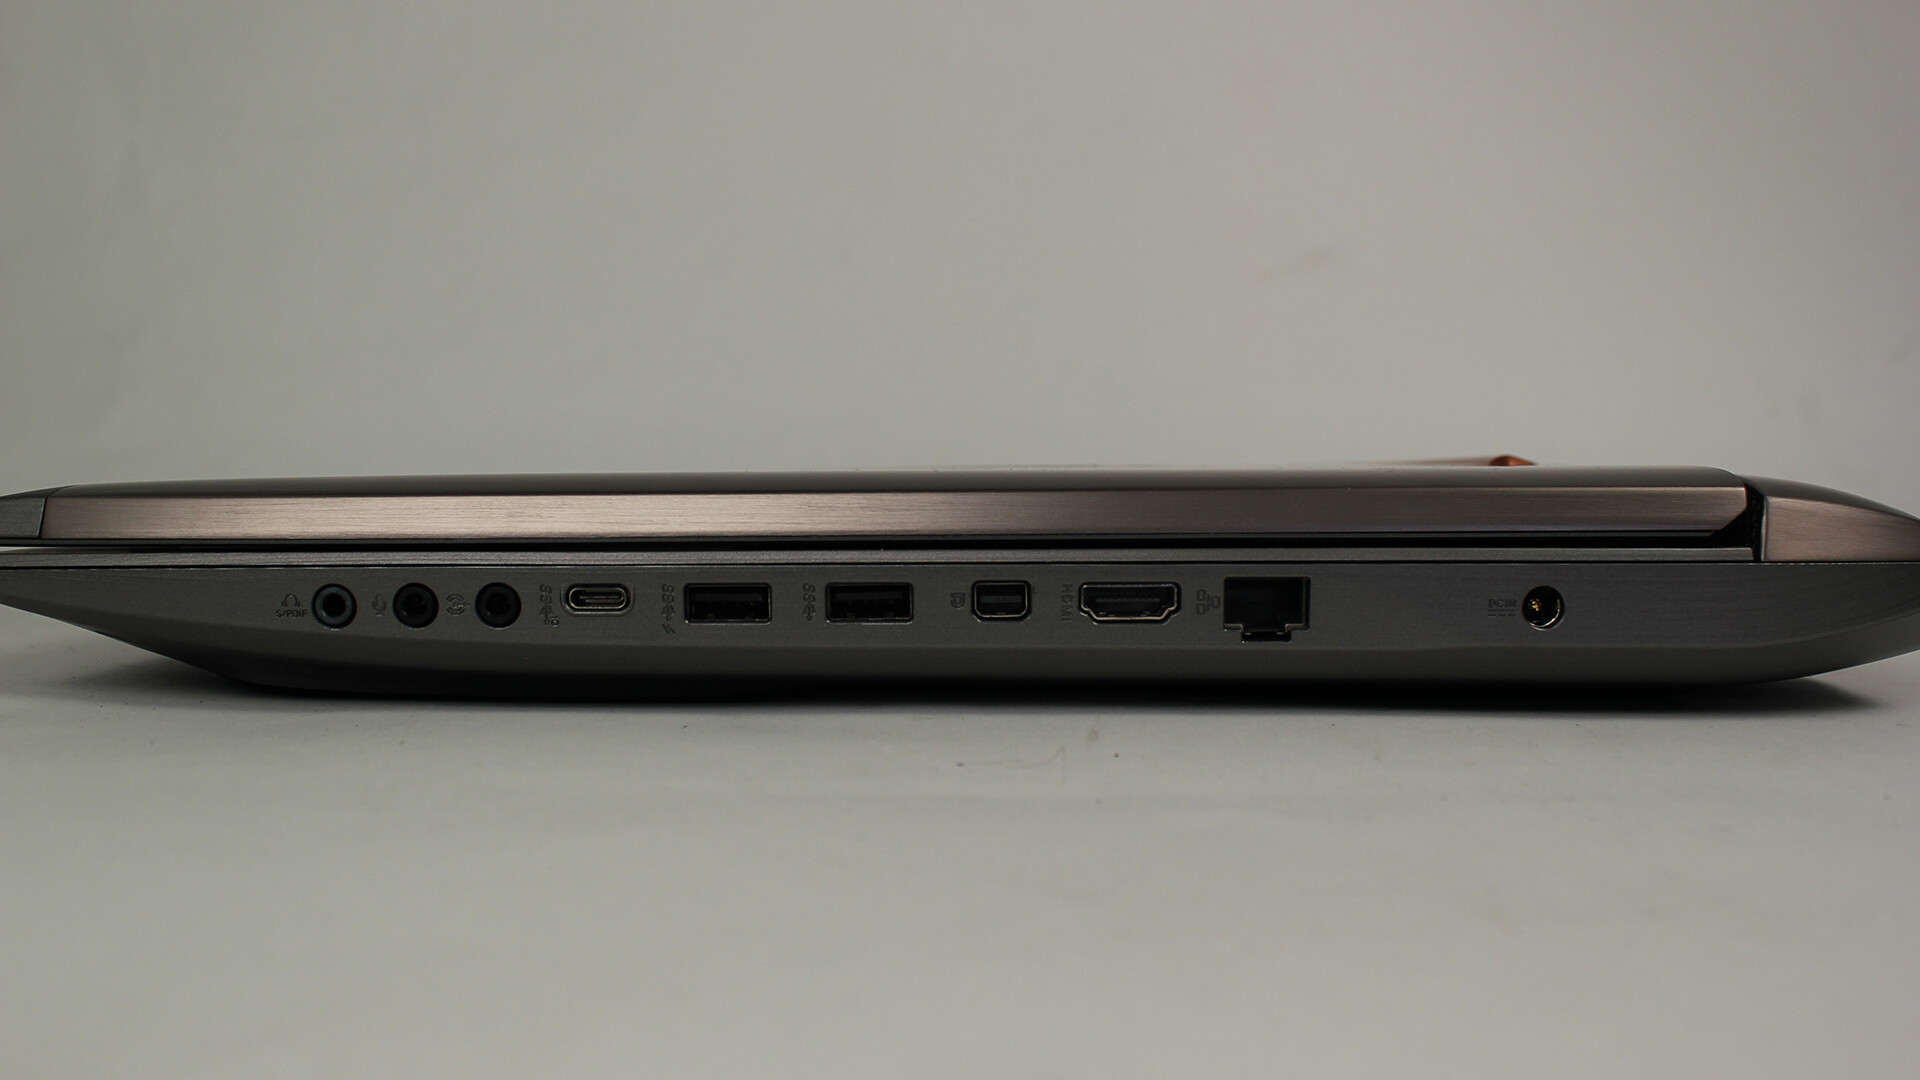 Asus Rog G752Vt-Dh72 (Laptop) Review 4